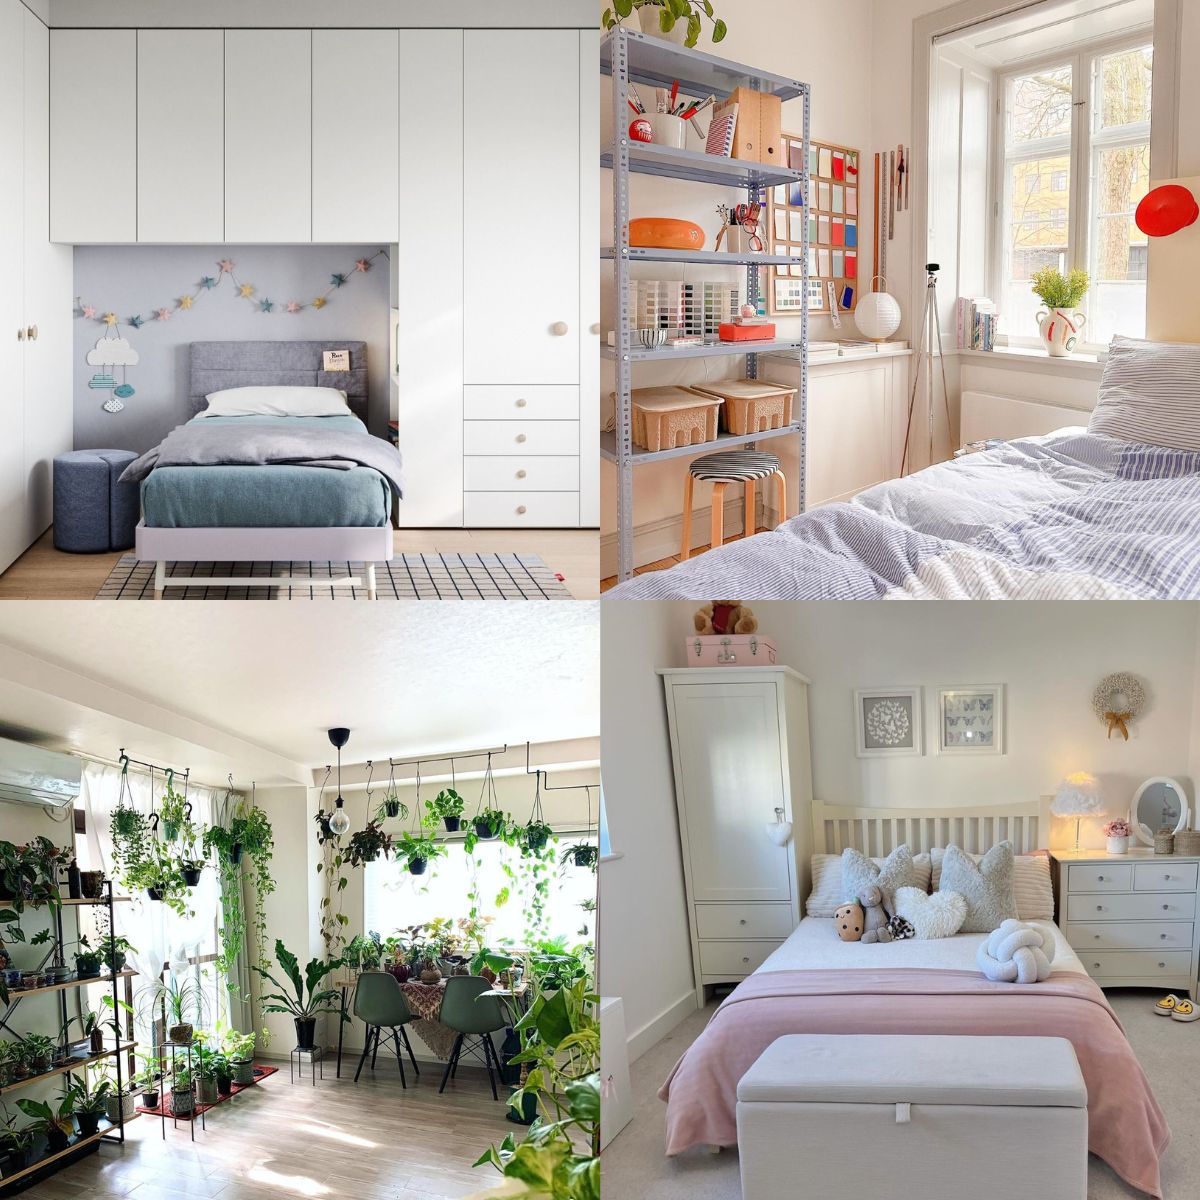 31 Smart Small Bedroom Design Ideas - Craftsy Hacks